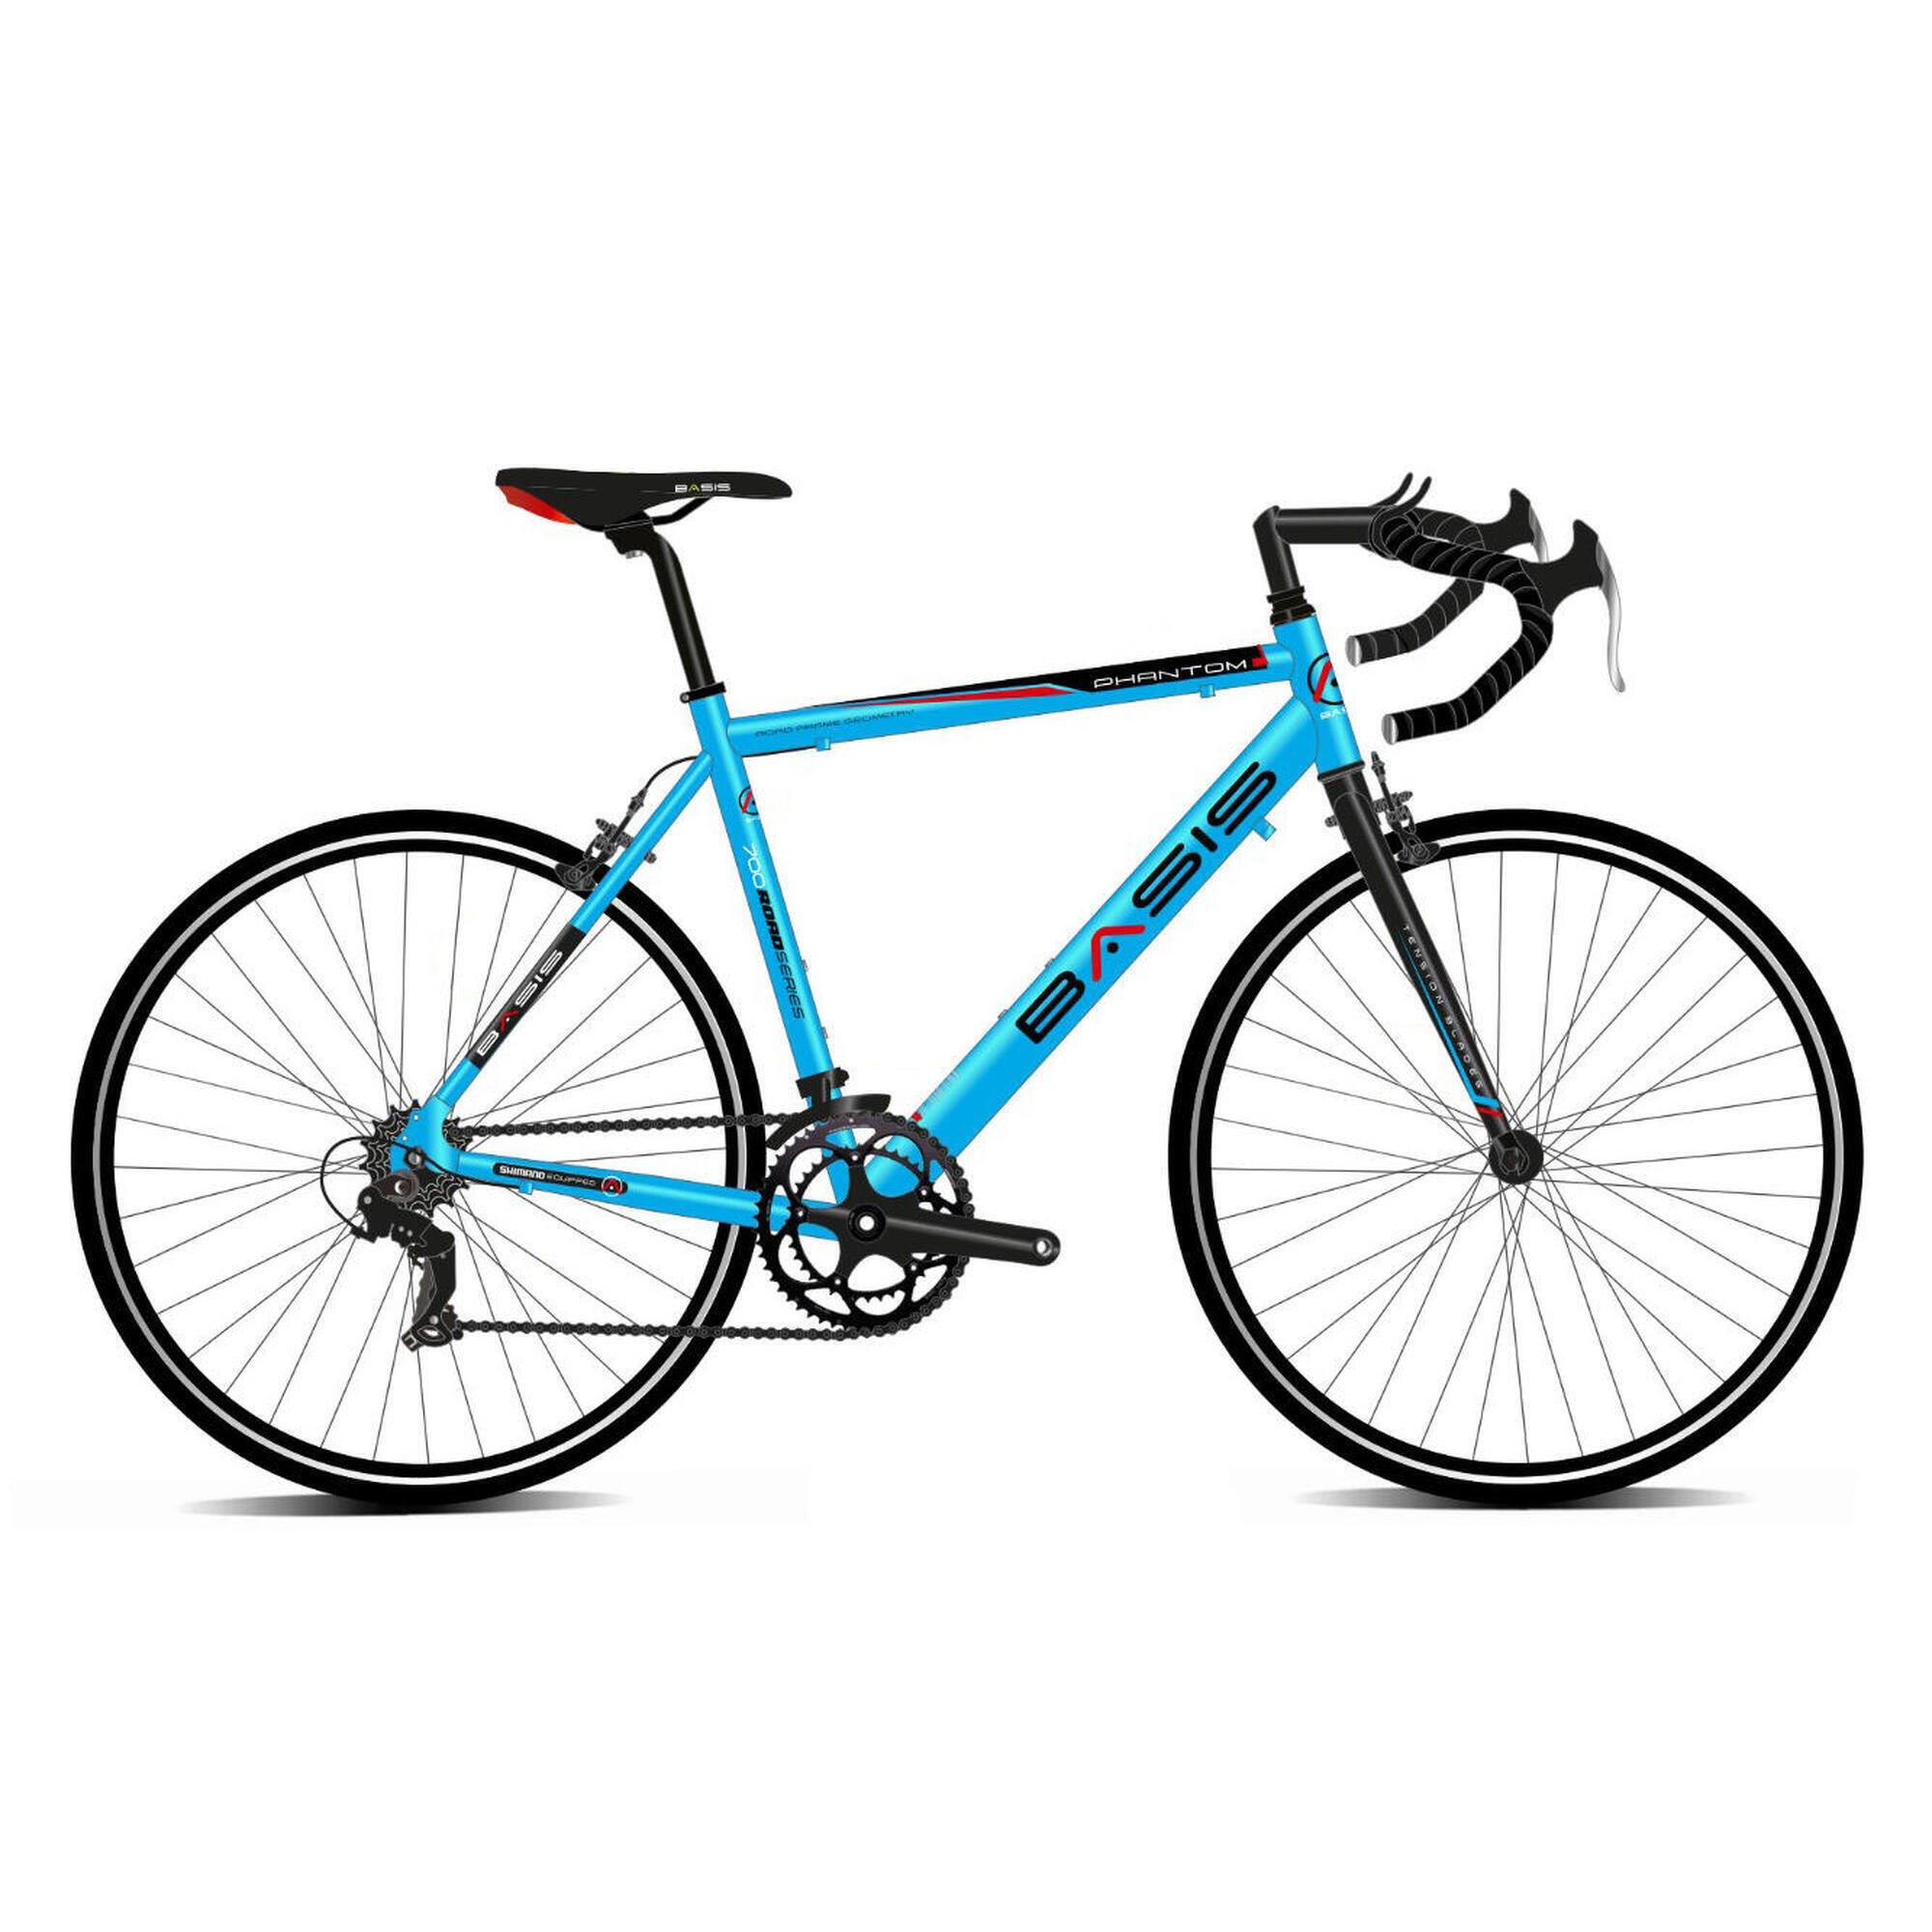 BASIS Basis Phantom Unisex Road Bike, 700c Wheel - Gloss Blue/Black